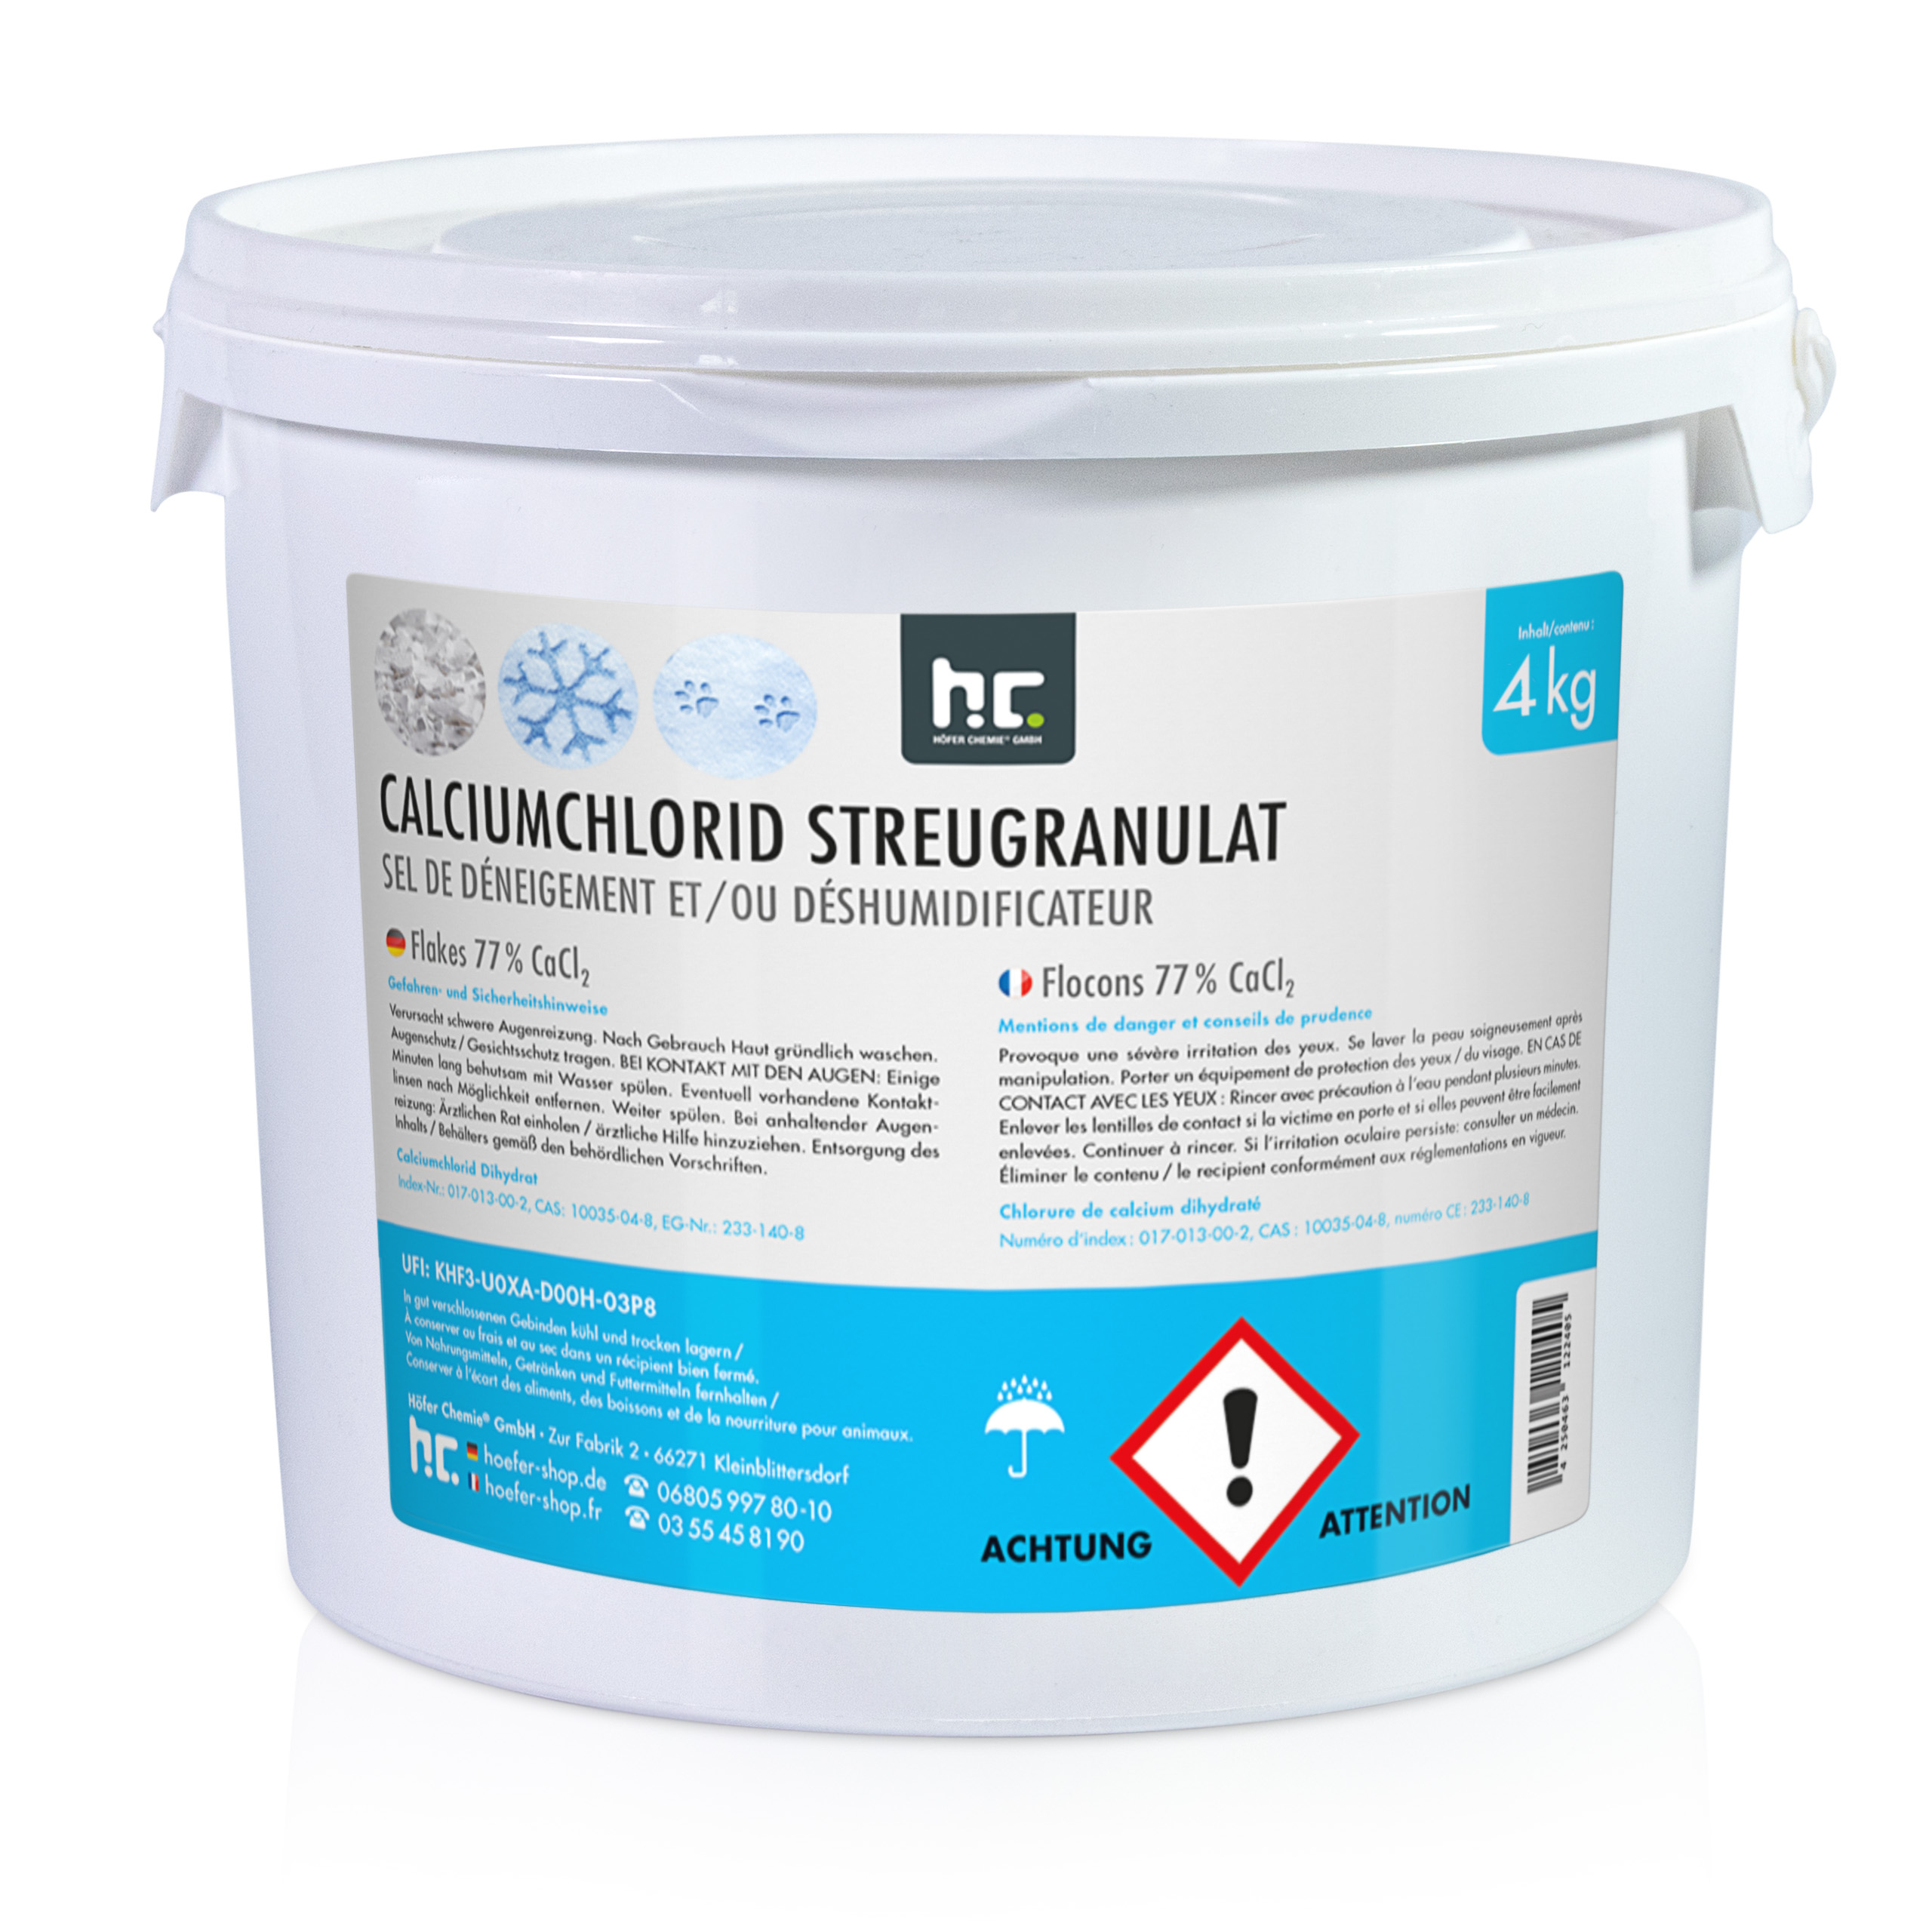 4 kg Calciumchlorid Streugranulat